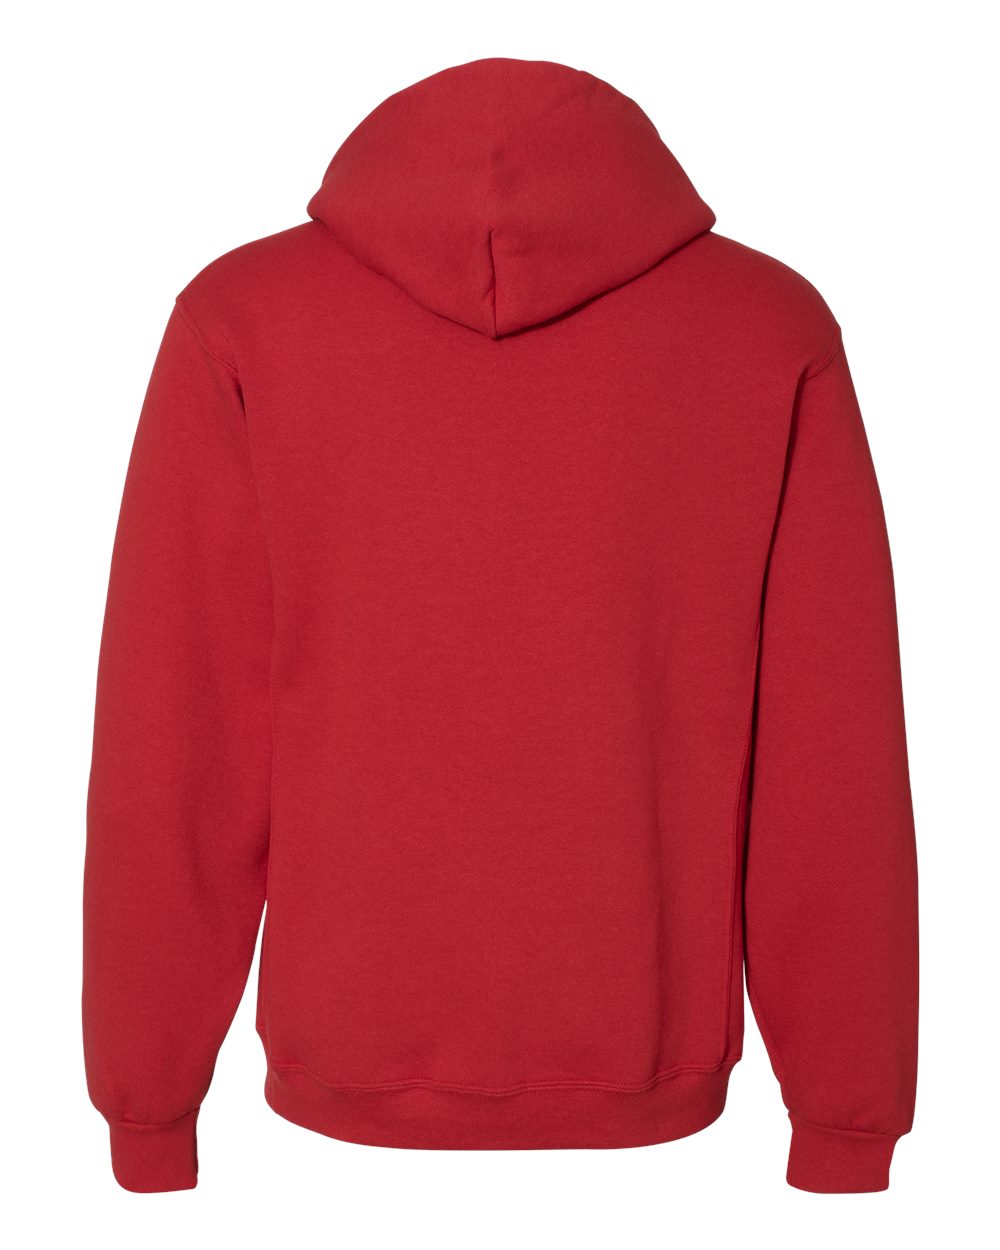 Russell Athletic Dri Power® Hooded Sweatshirt 695HBM #color_True Red